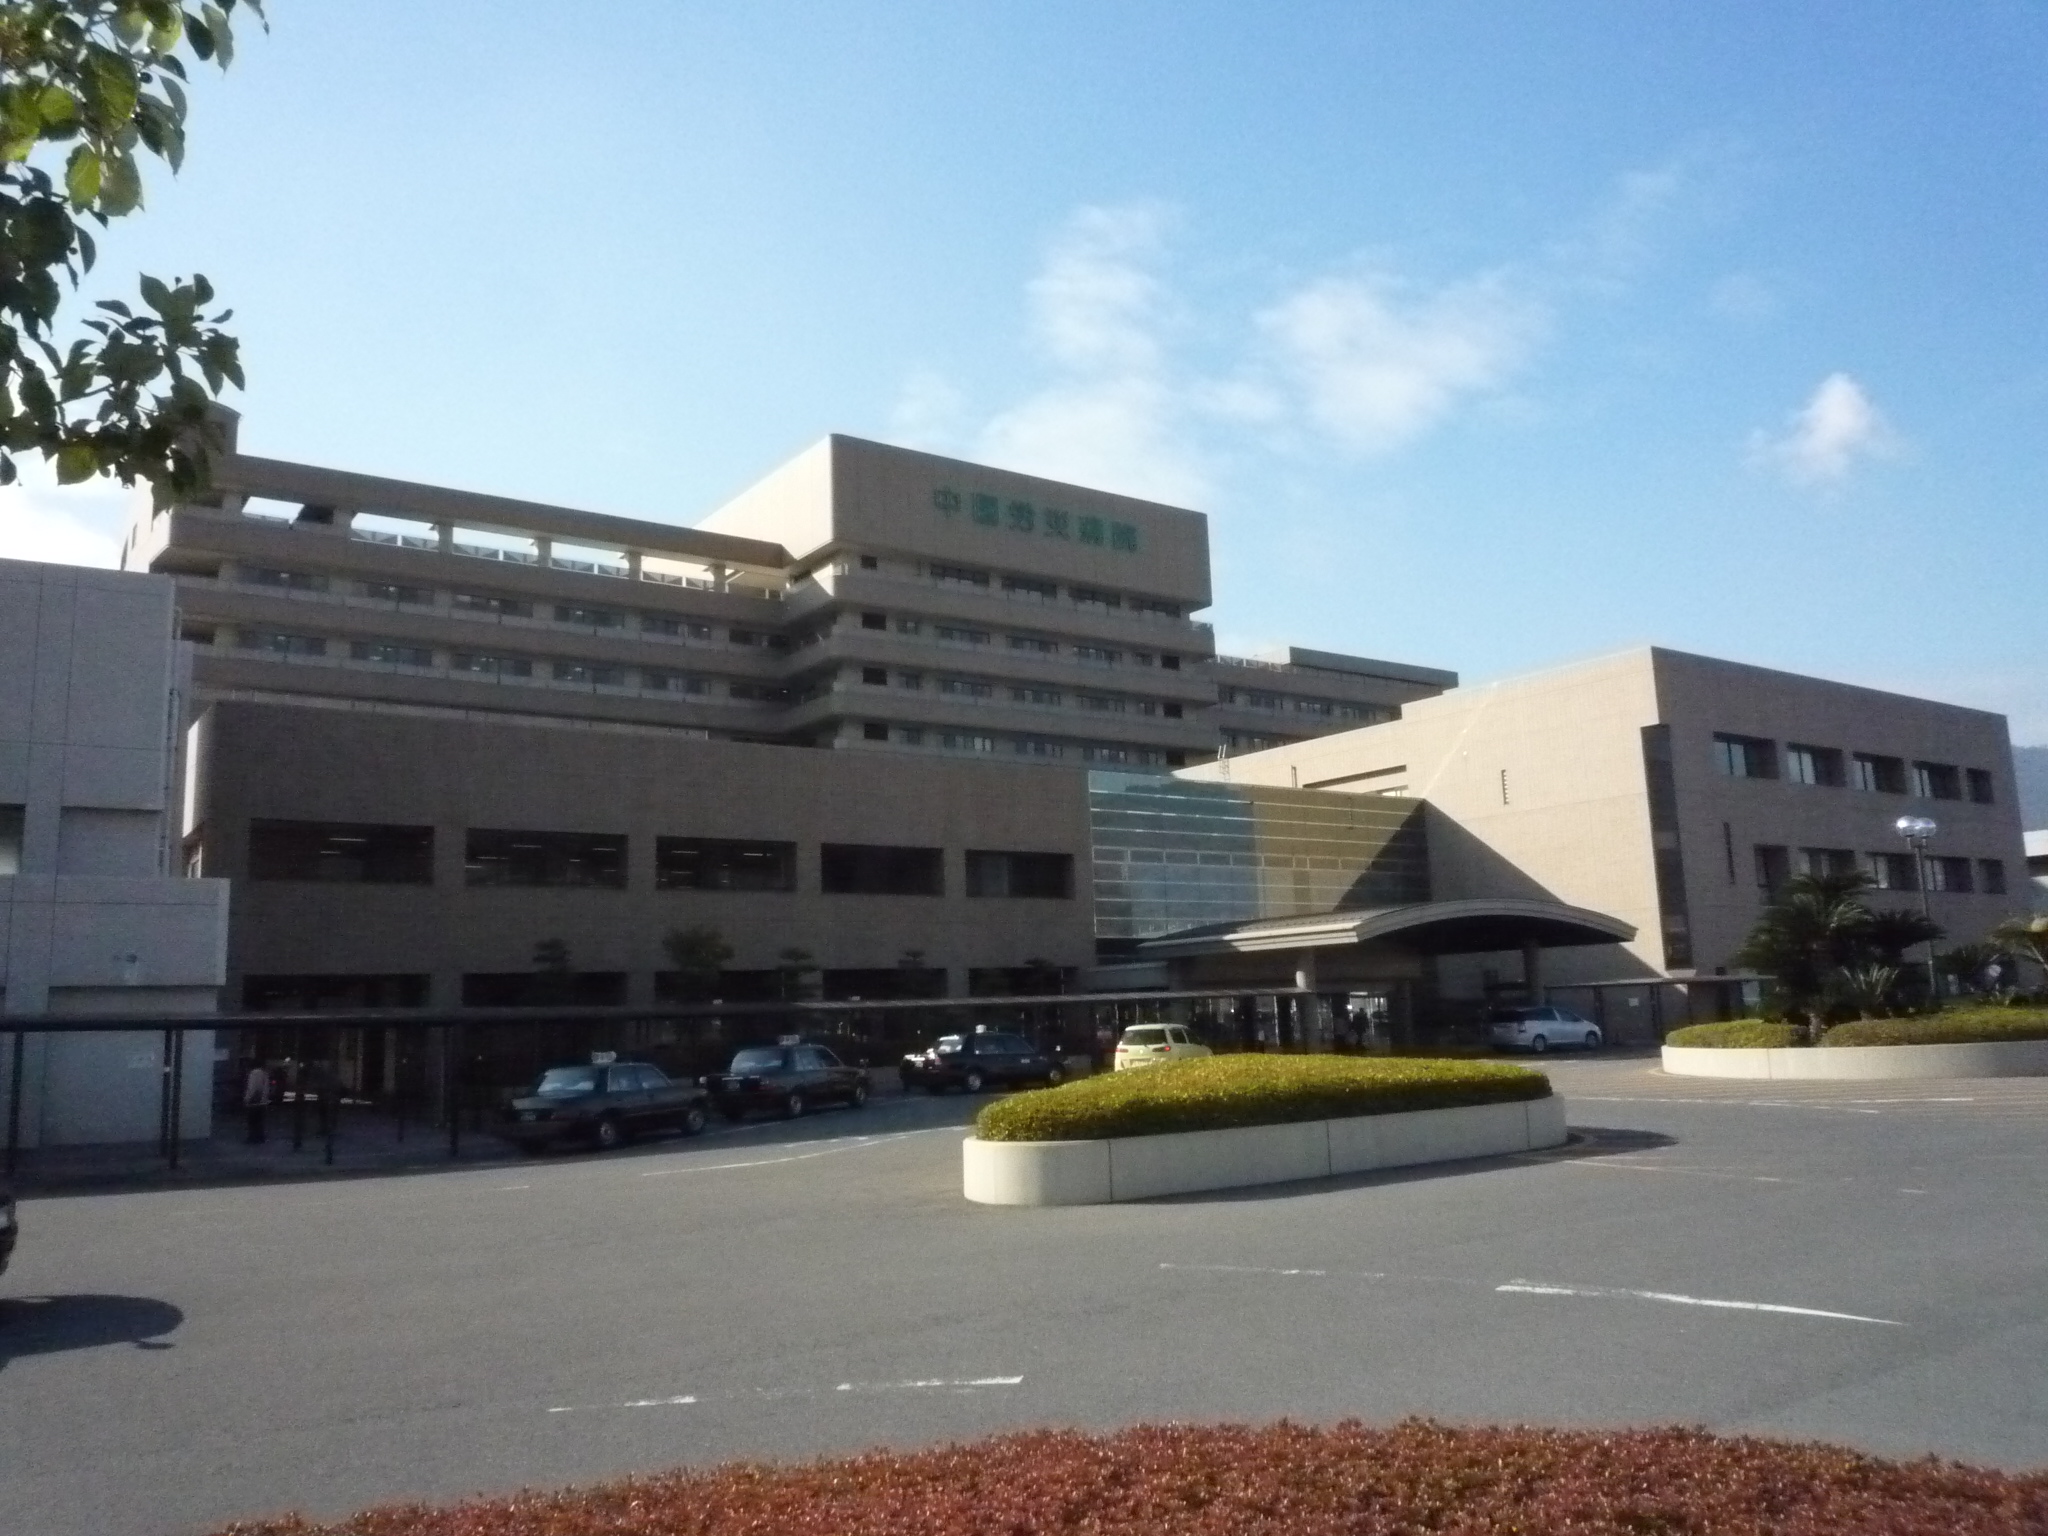 Hospital. 1136m to the National Institute of Labor Health and Welfare Organization Chugokurosaibyoin (hospital)